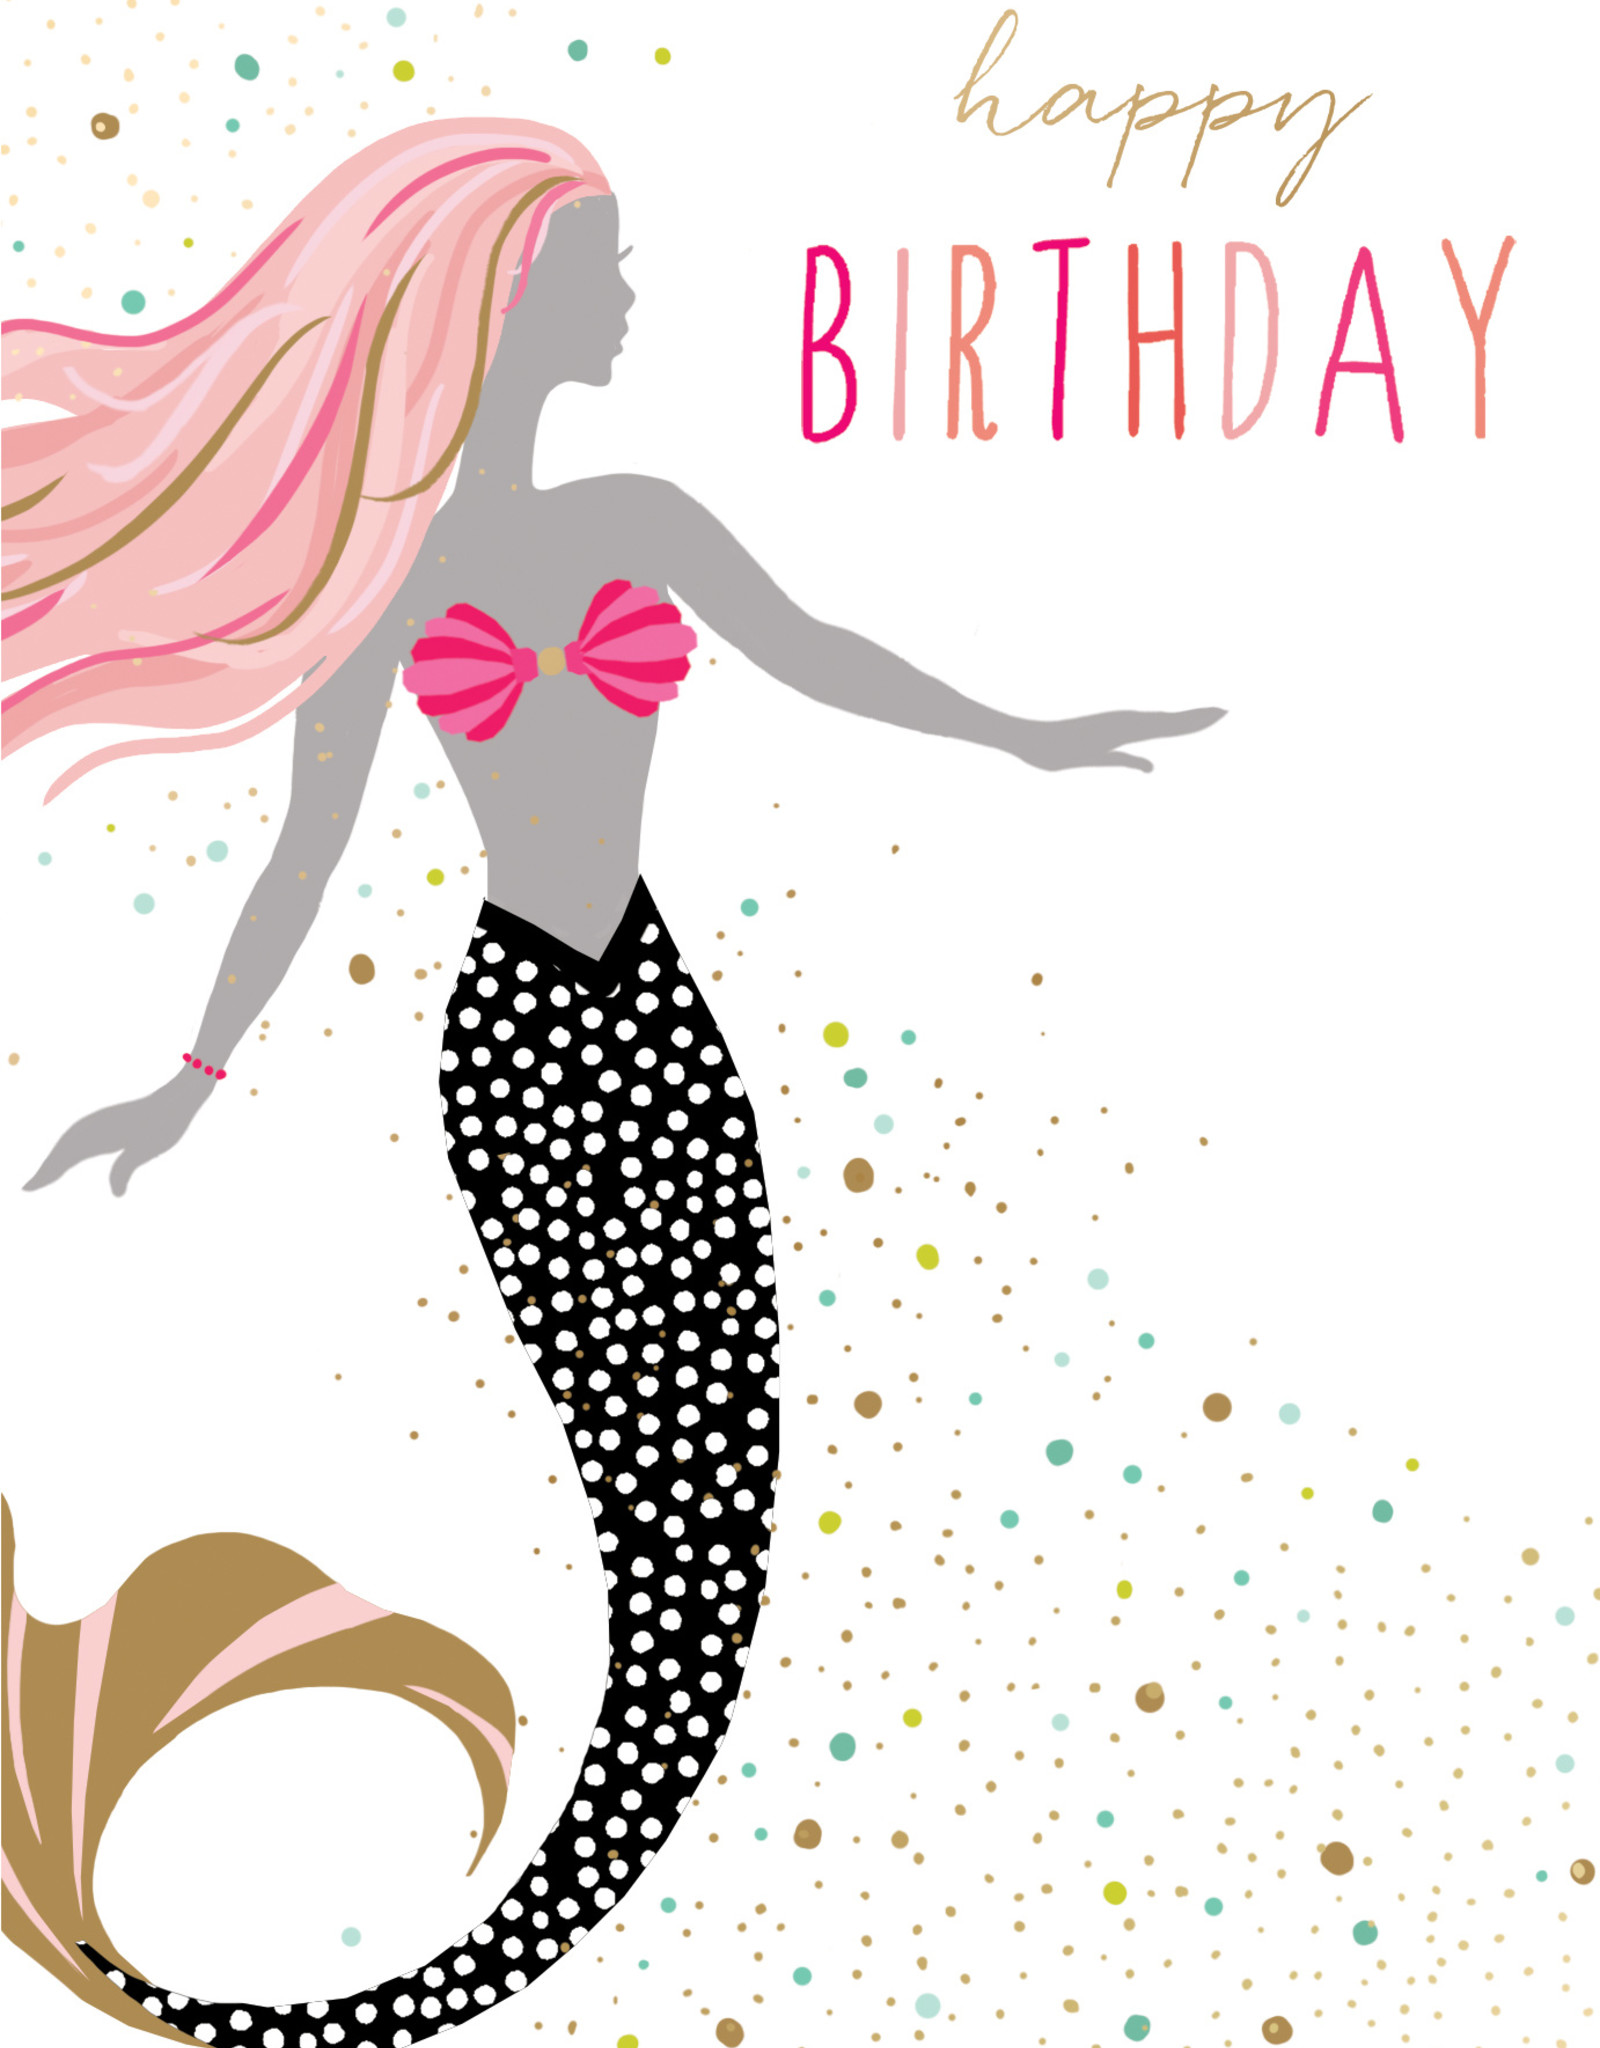 Pictura Pictura - Mermaid Happy Birthday Card 61049